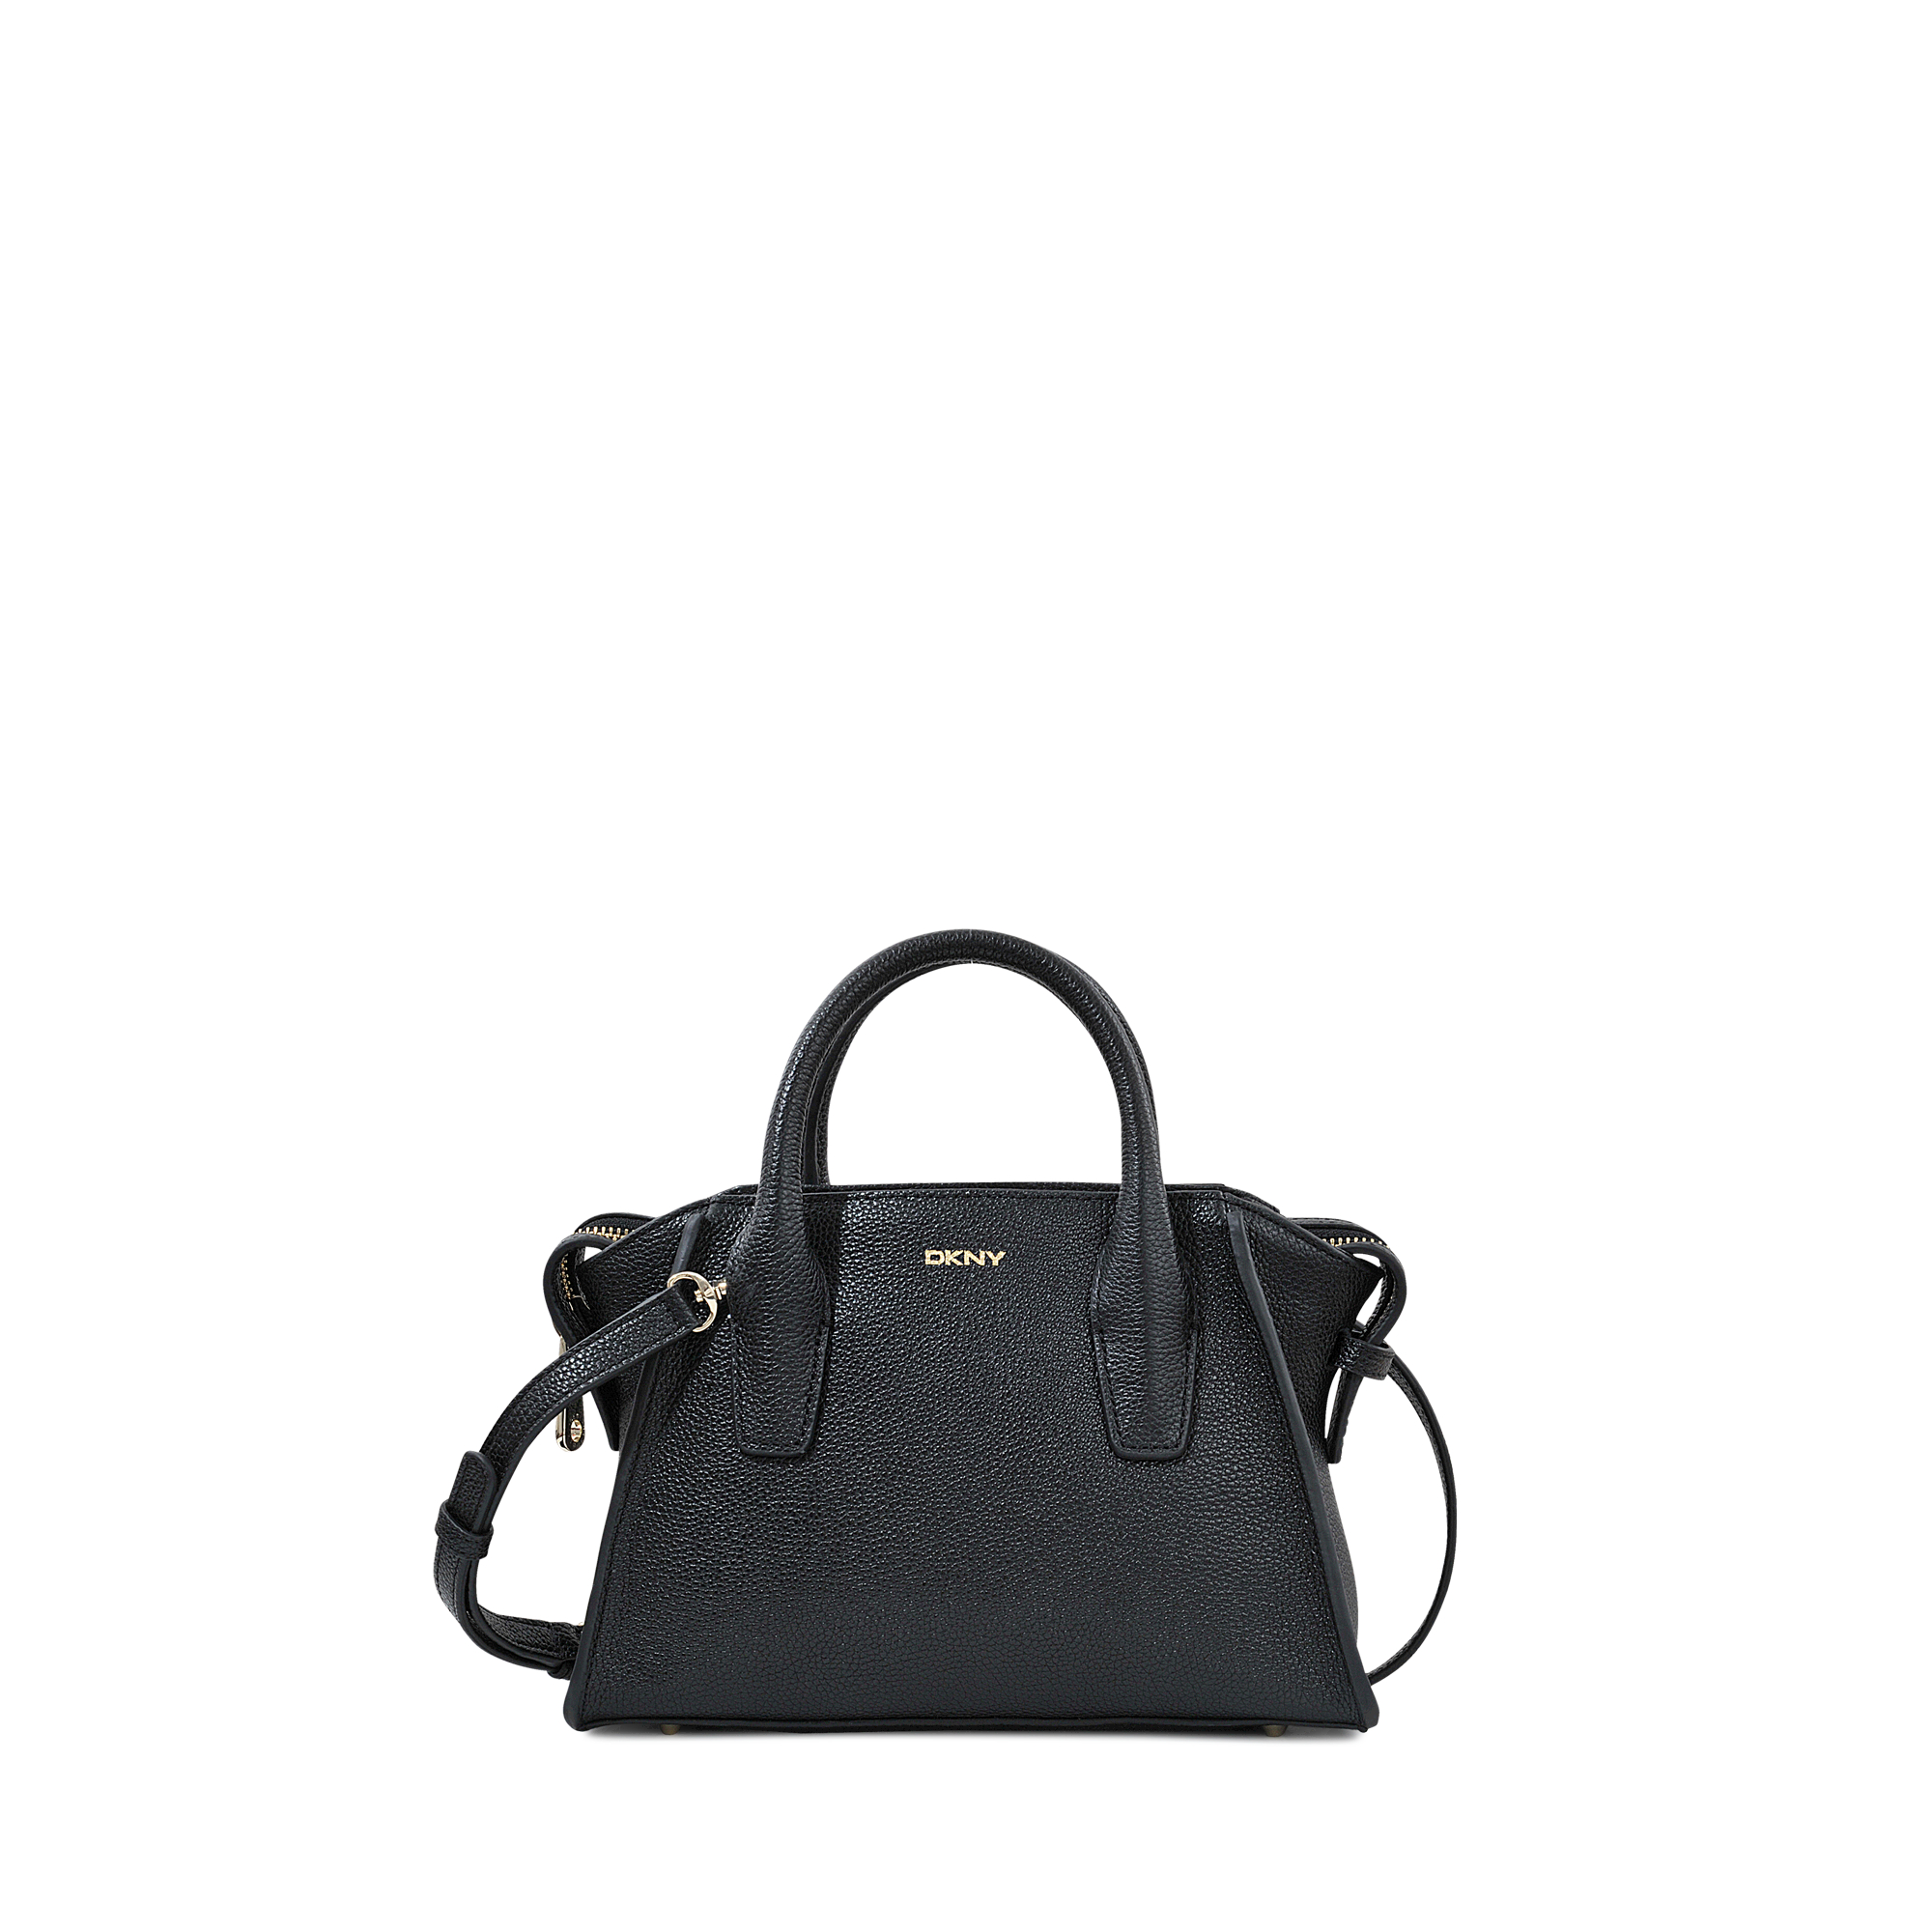 DKNY Leather Mini Satchel Chelsea Bag in Black - Lyst